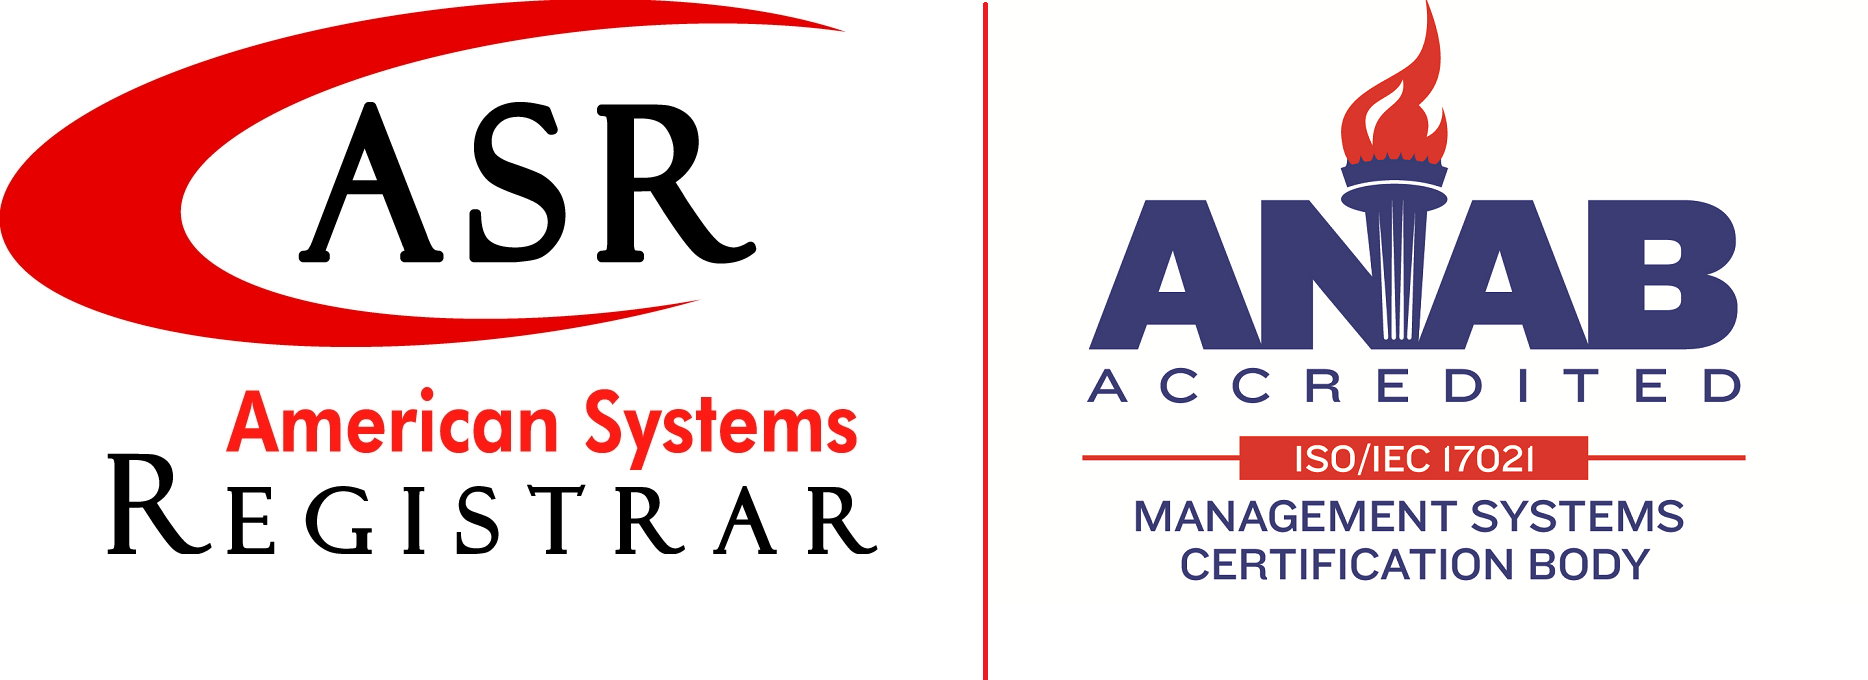 ASR ANAB Logo for ISO registration